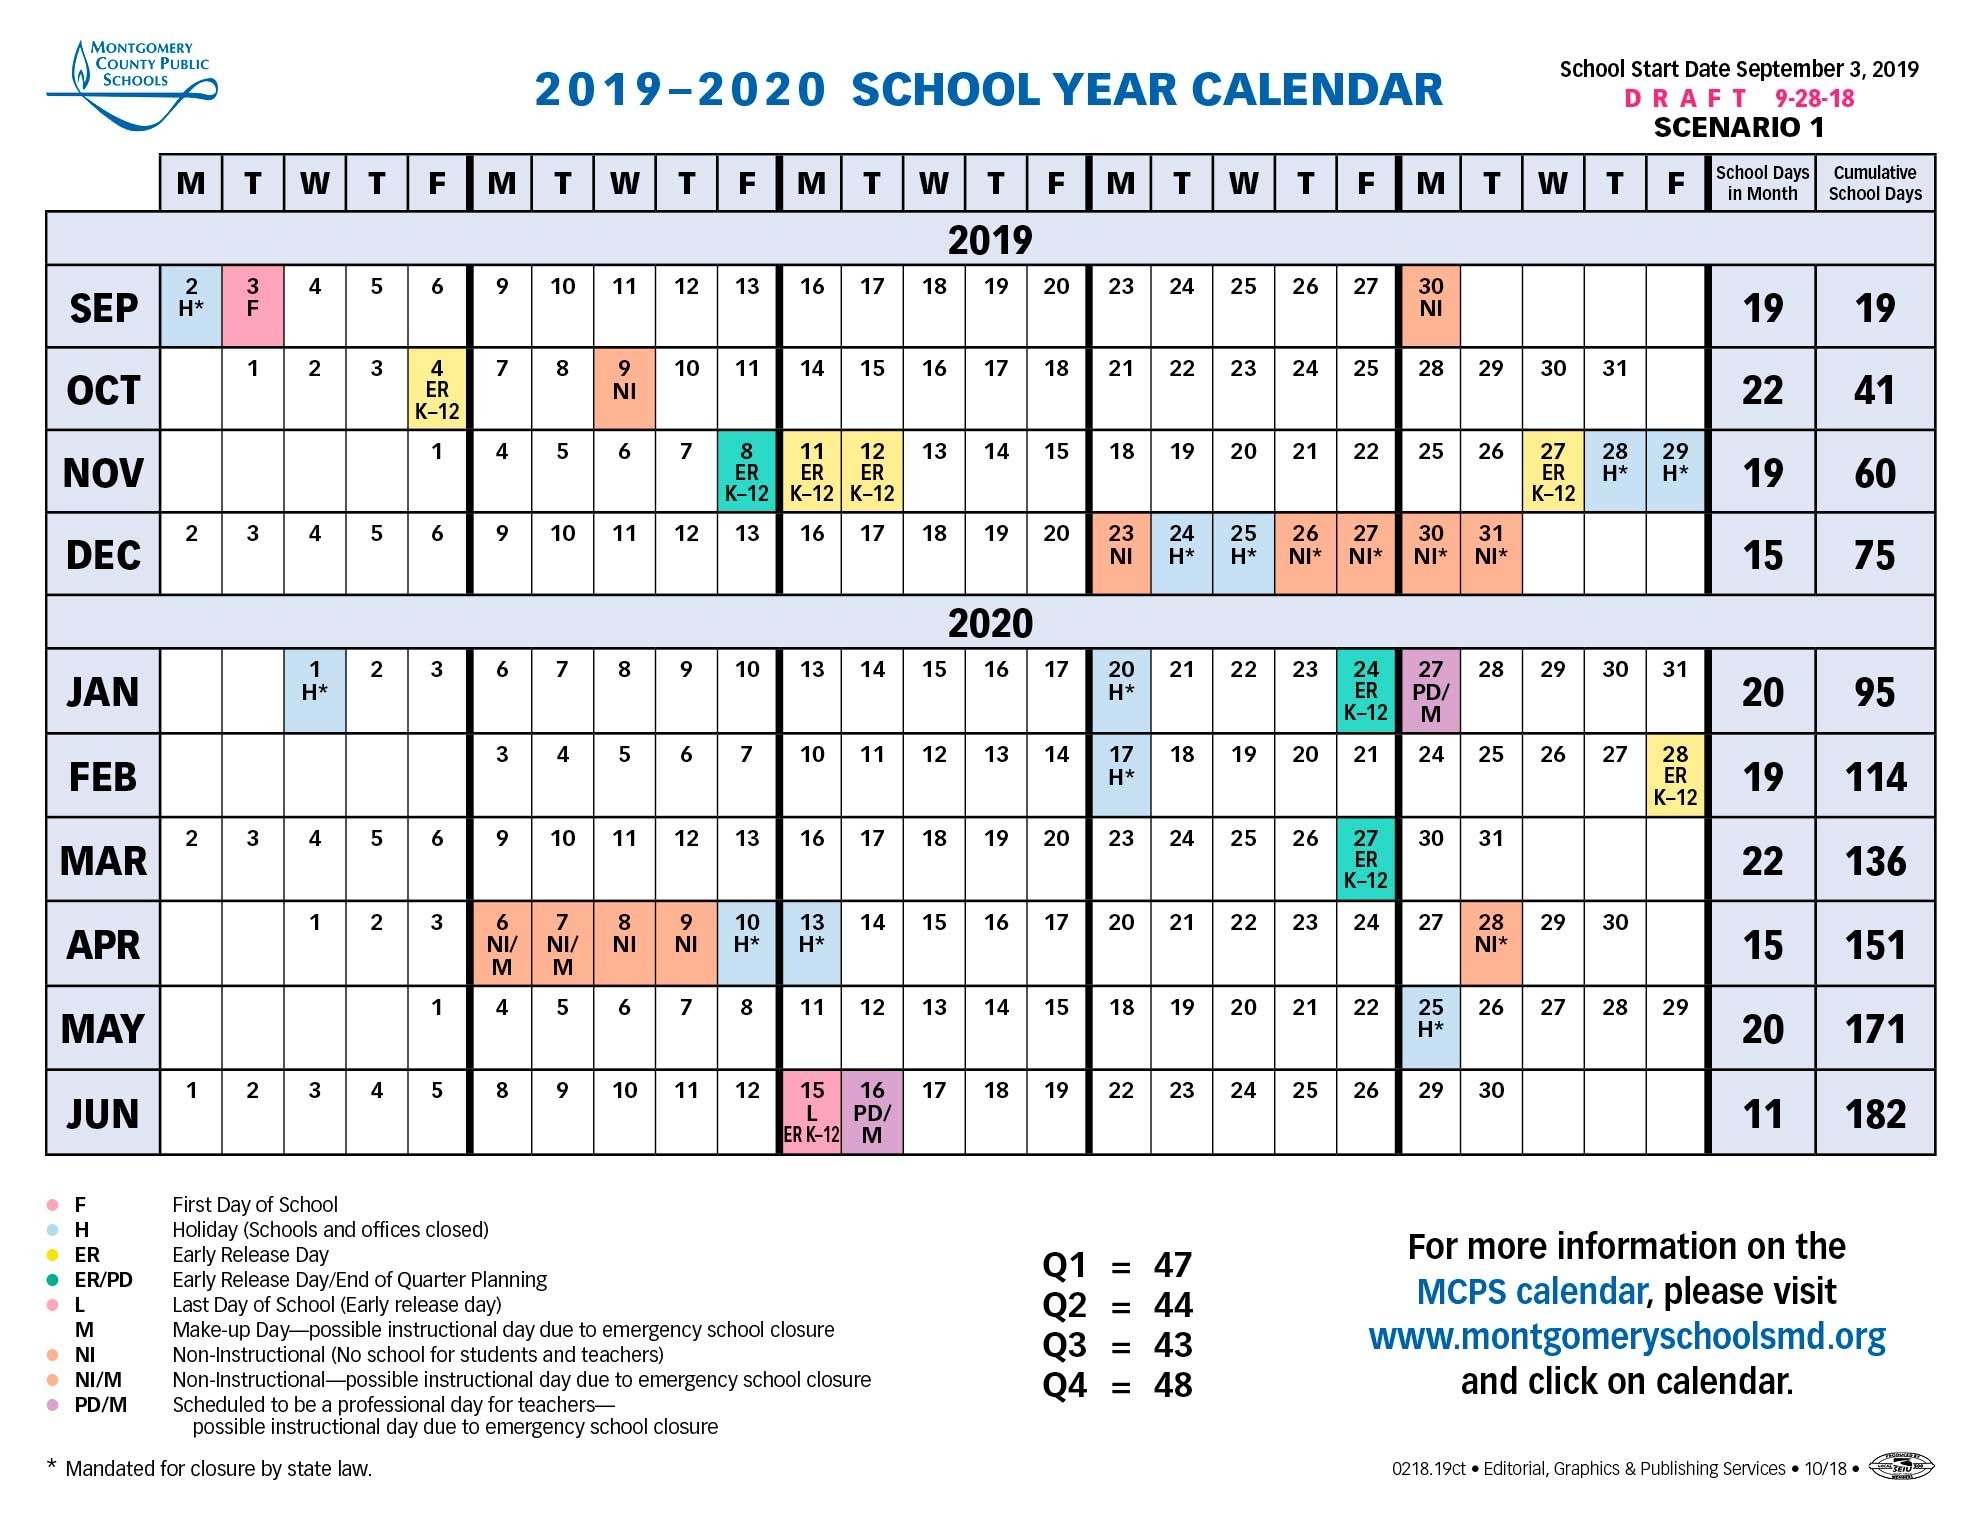 School Board Approves Longer Spring Break For 2019-2020-2020 Jewish Holidays Calendar